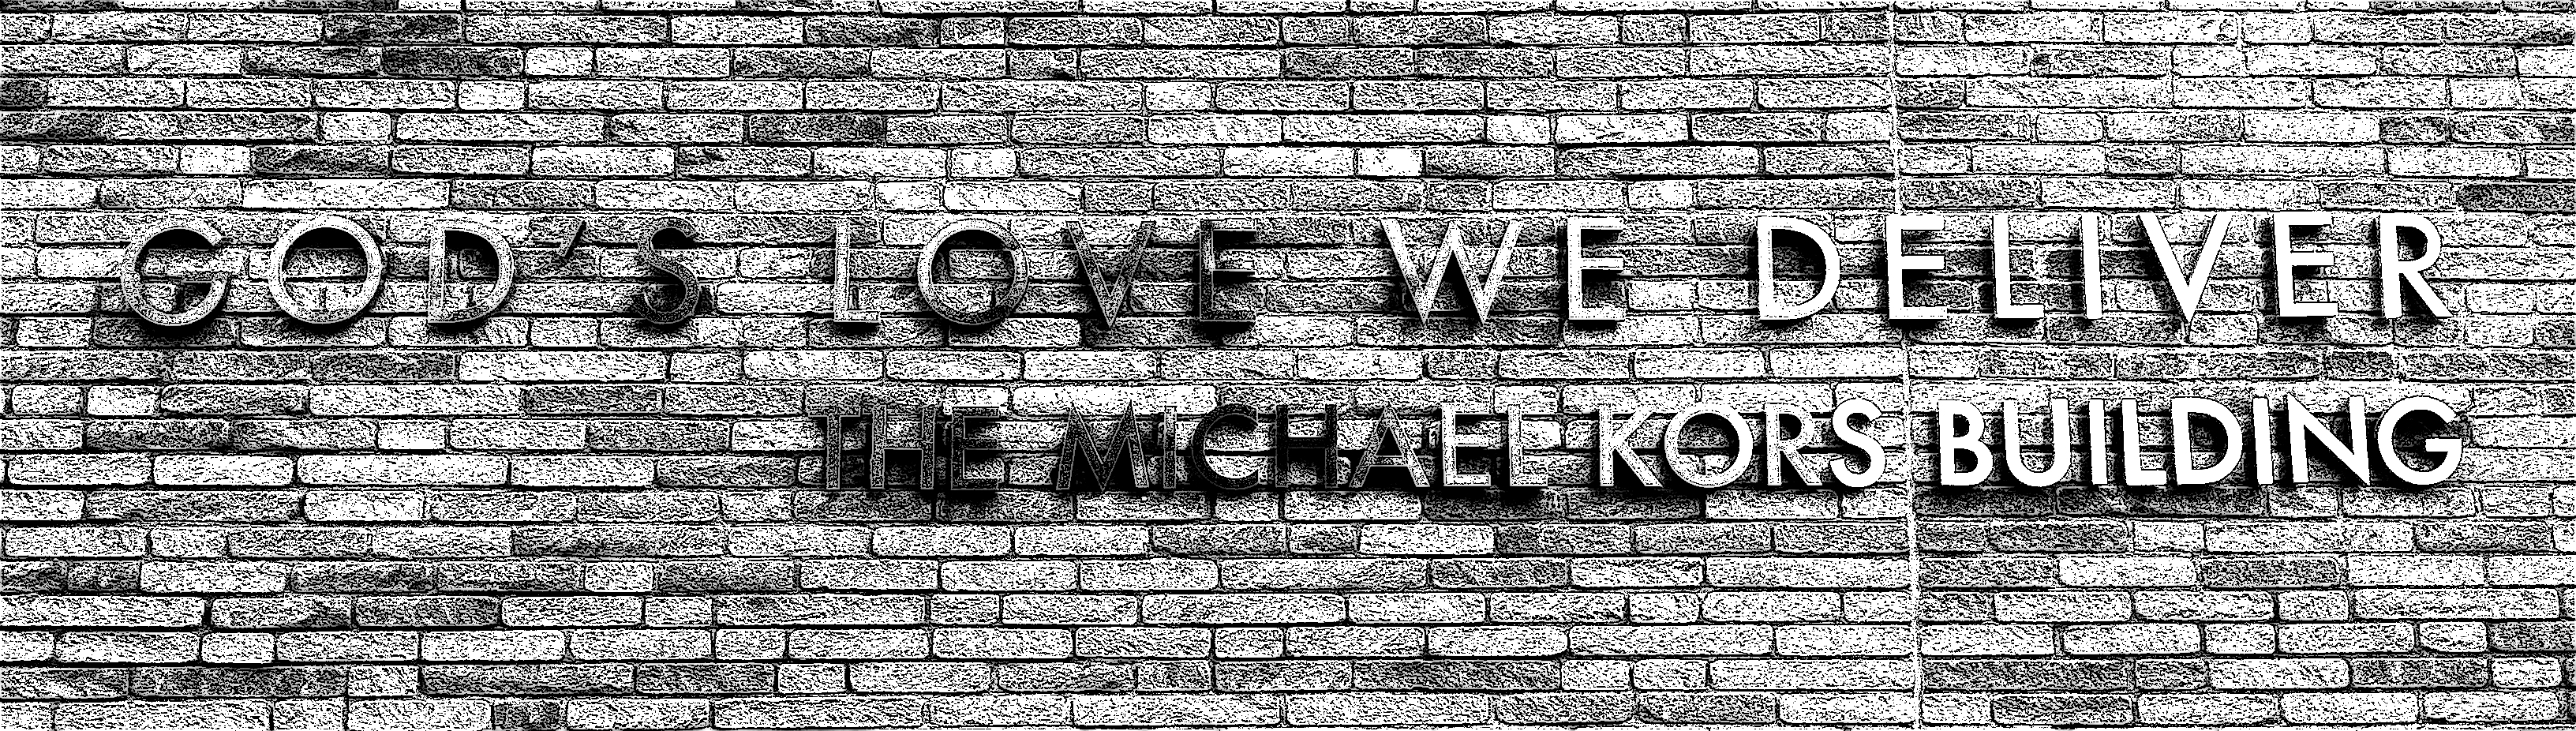 Figure 5.31: God's Love We Deliver Michael Kors Building (Photo Credit: BGS)